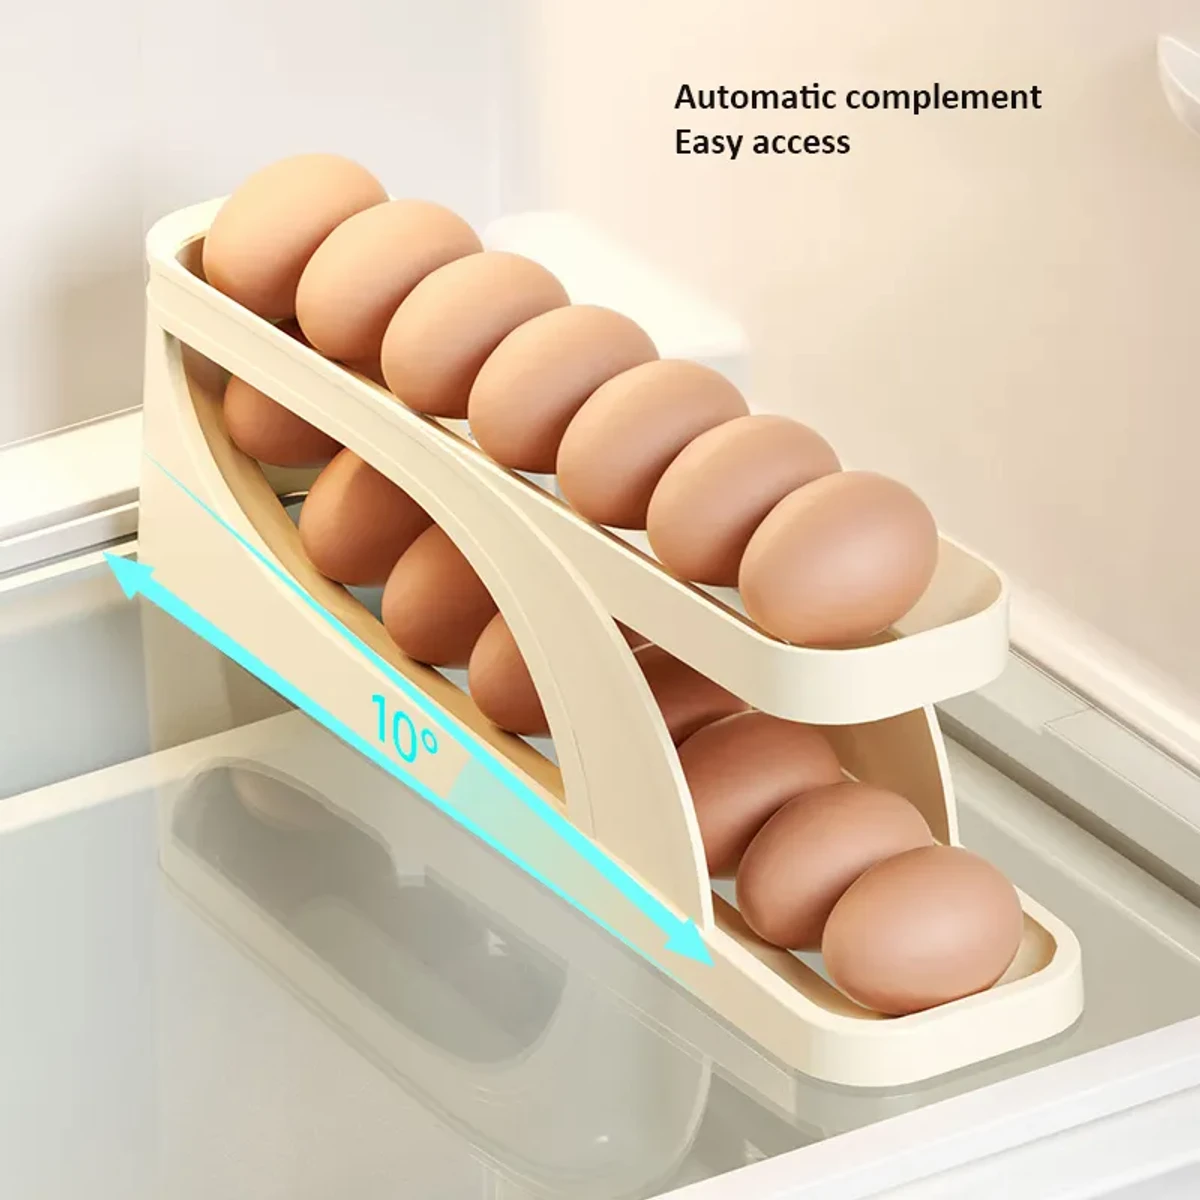 Plastic Automatic Rolling Egg Dispenser Holder (1 pcs)